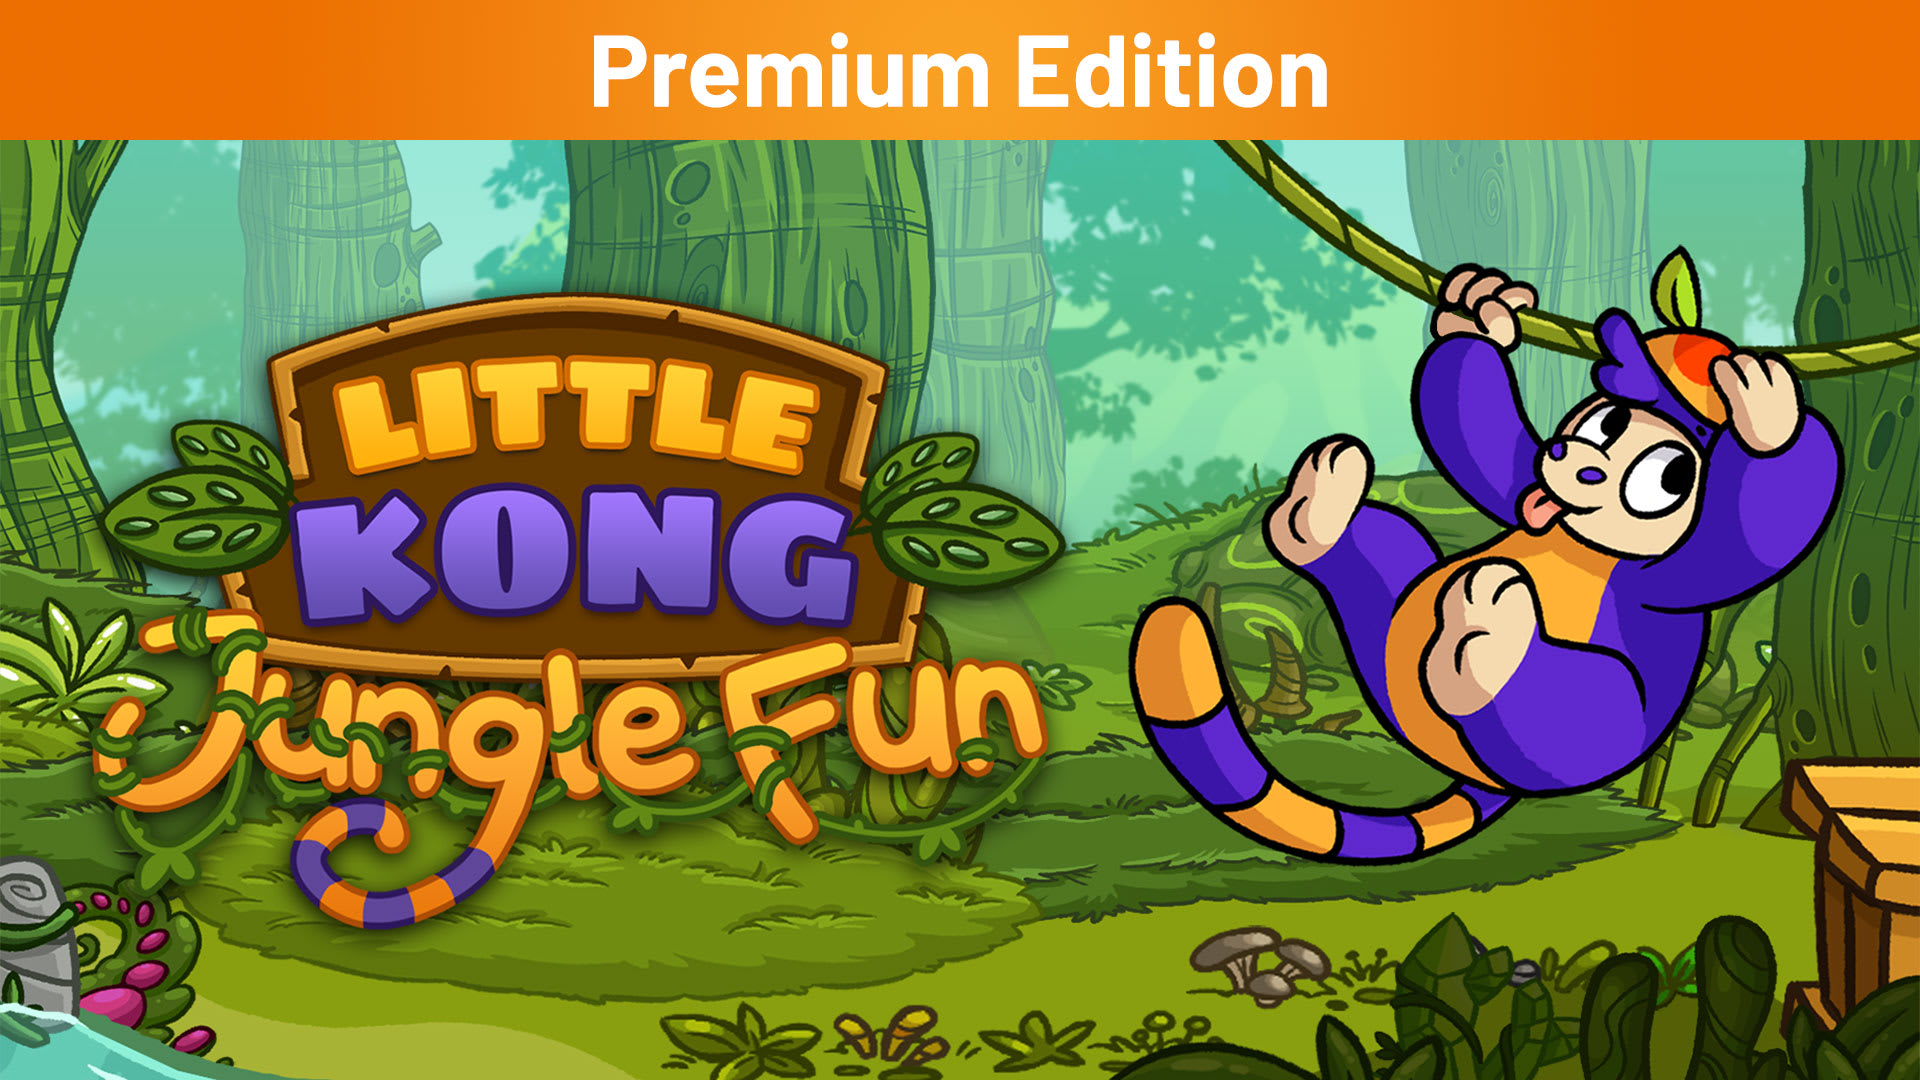 Little Kong Jungle Fun Premium Edition